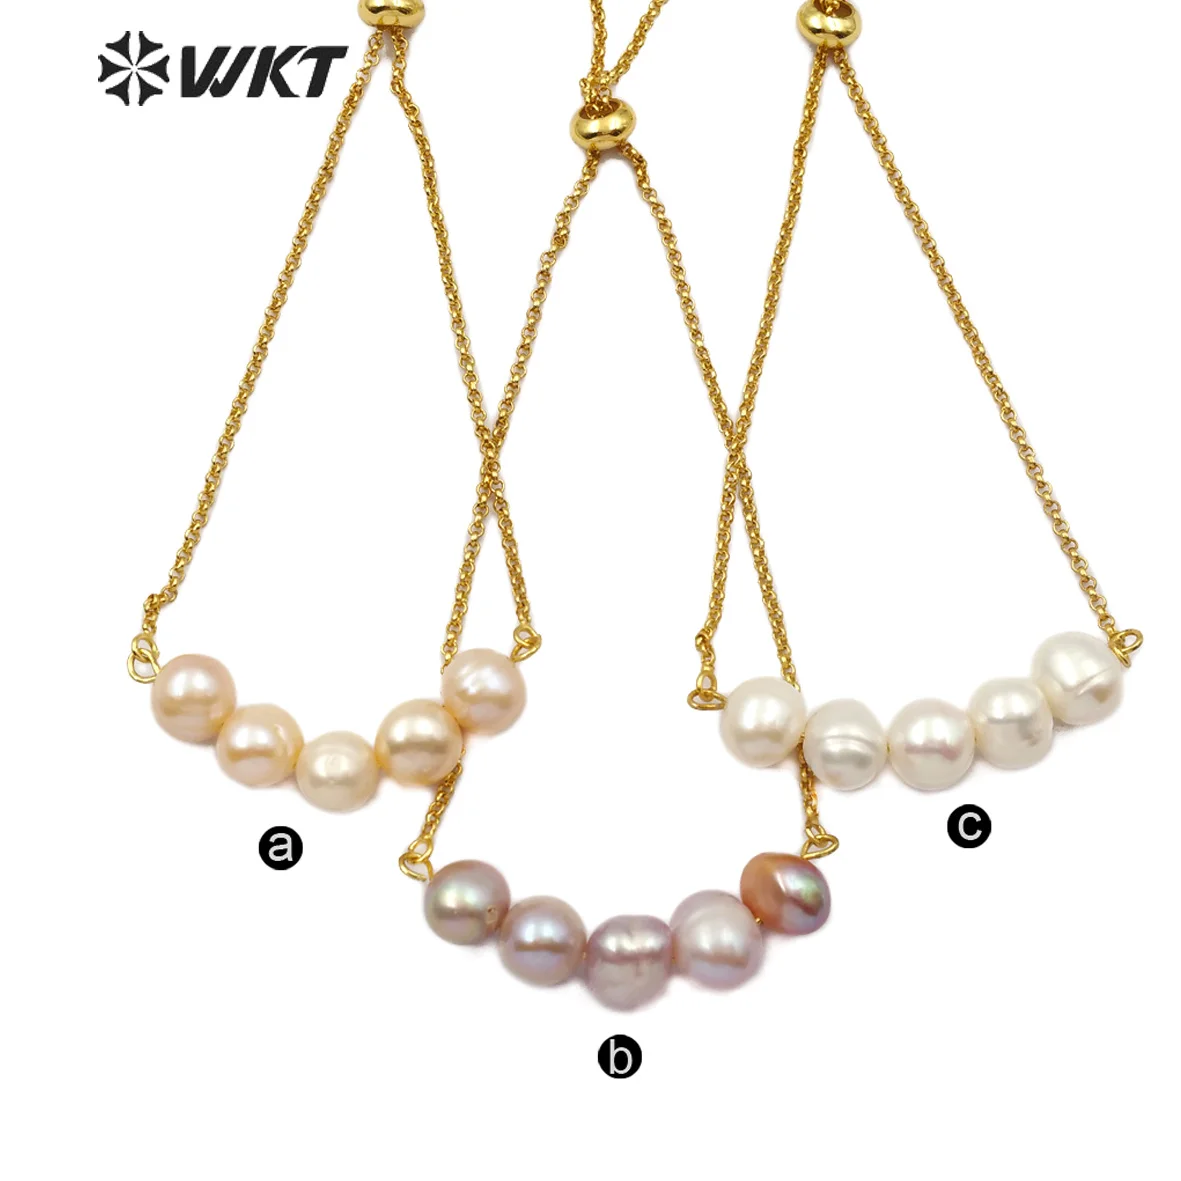 WT-B482 Nuevo arriva! blanco natural púrpura de la perla de agua dulce de la Pulsera ajustable de oro Brazalete de las mujeres de moda de verano de la Pulsera de la Joyería 5